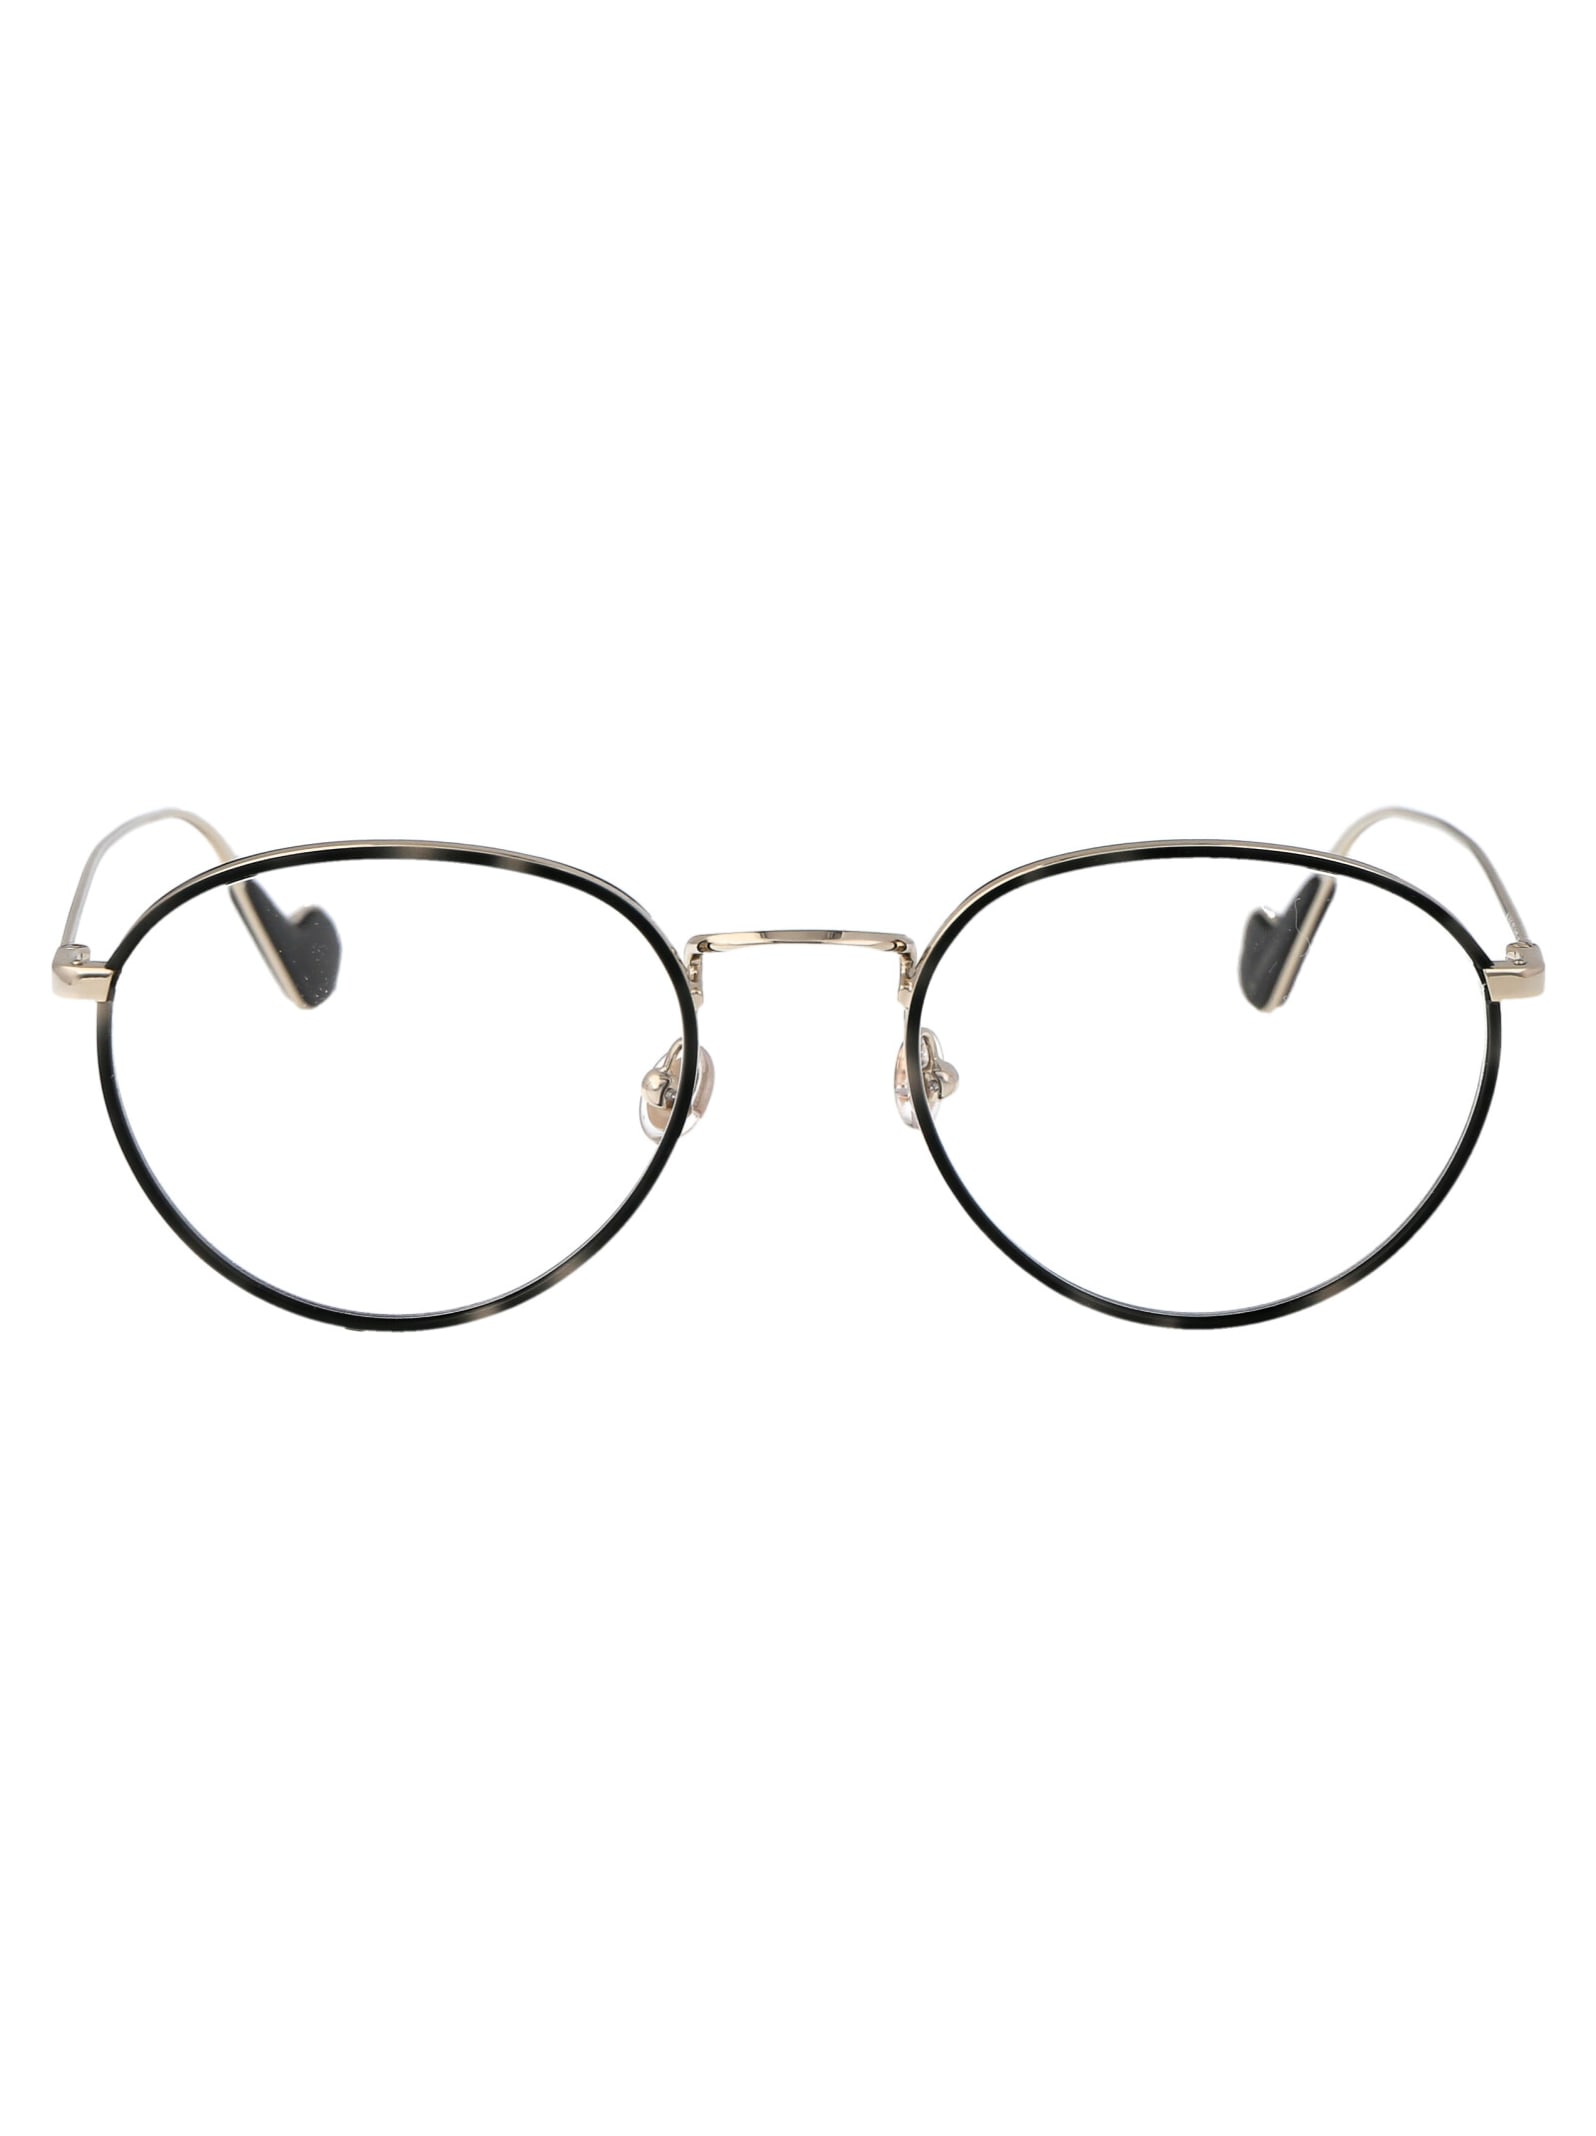 Ml5110 Glasses